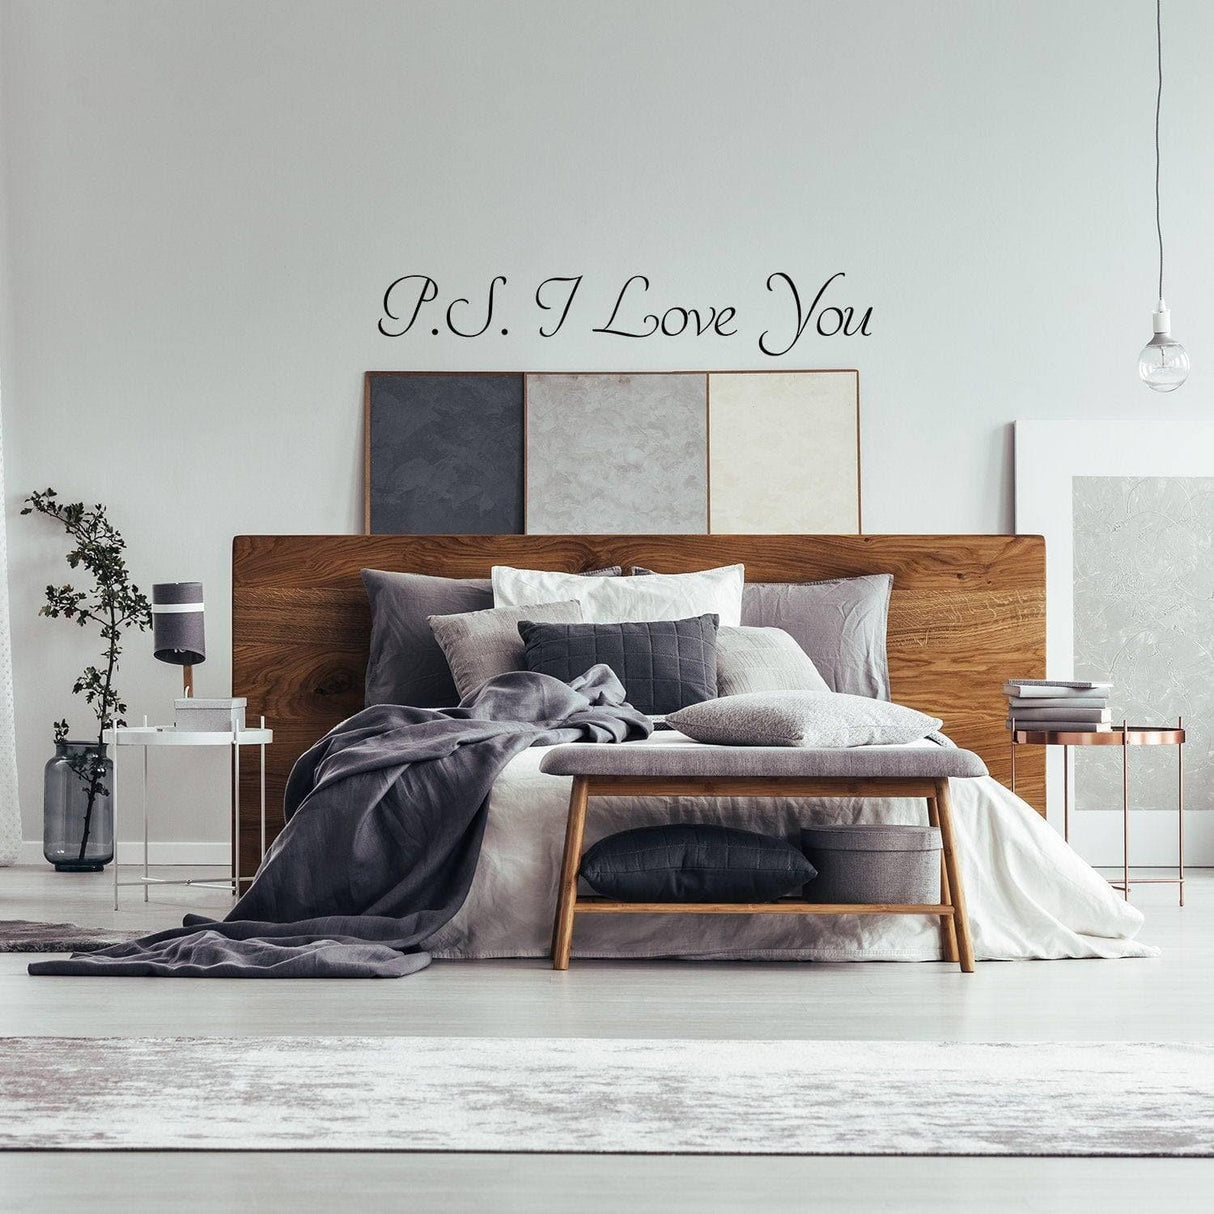 Romantic Bedroom Decal Sticker Wall - Decords Vinyl – Love Quote